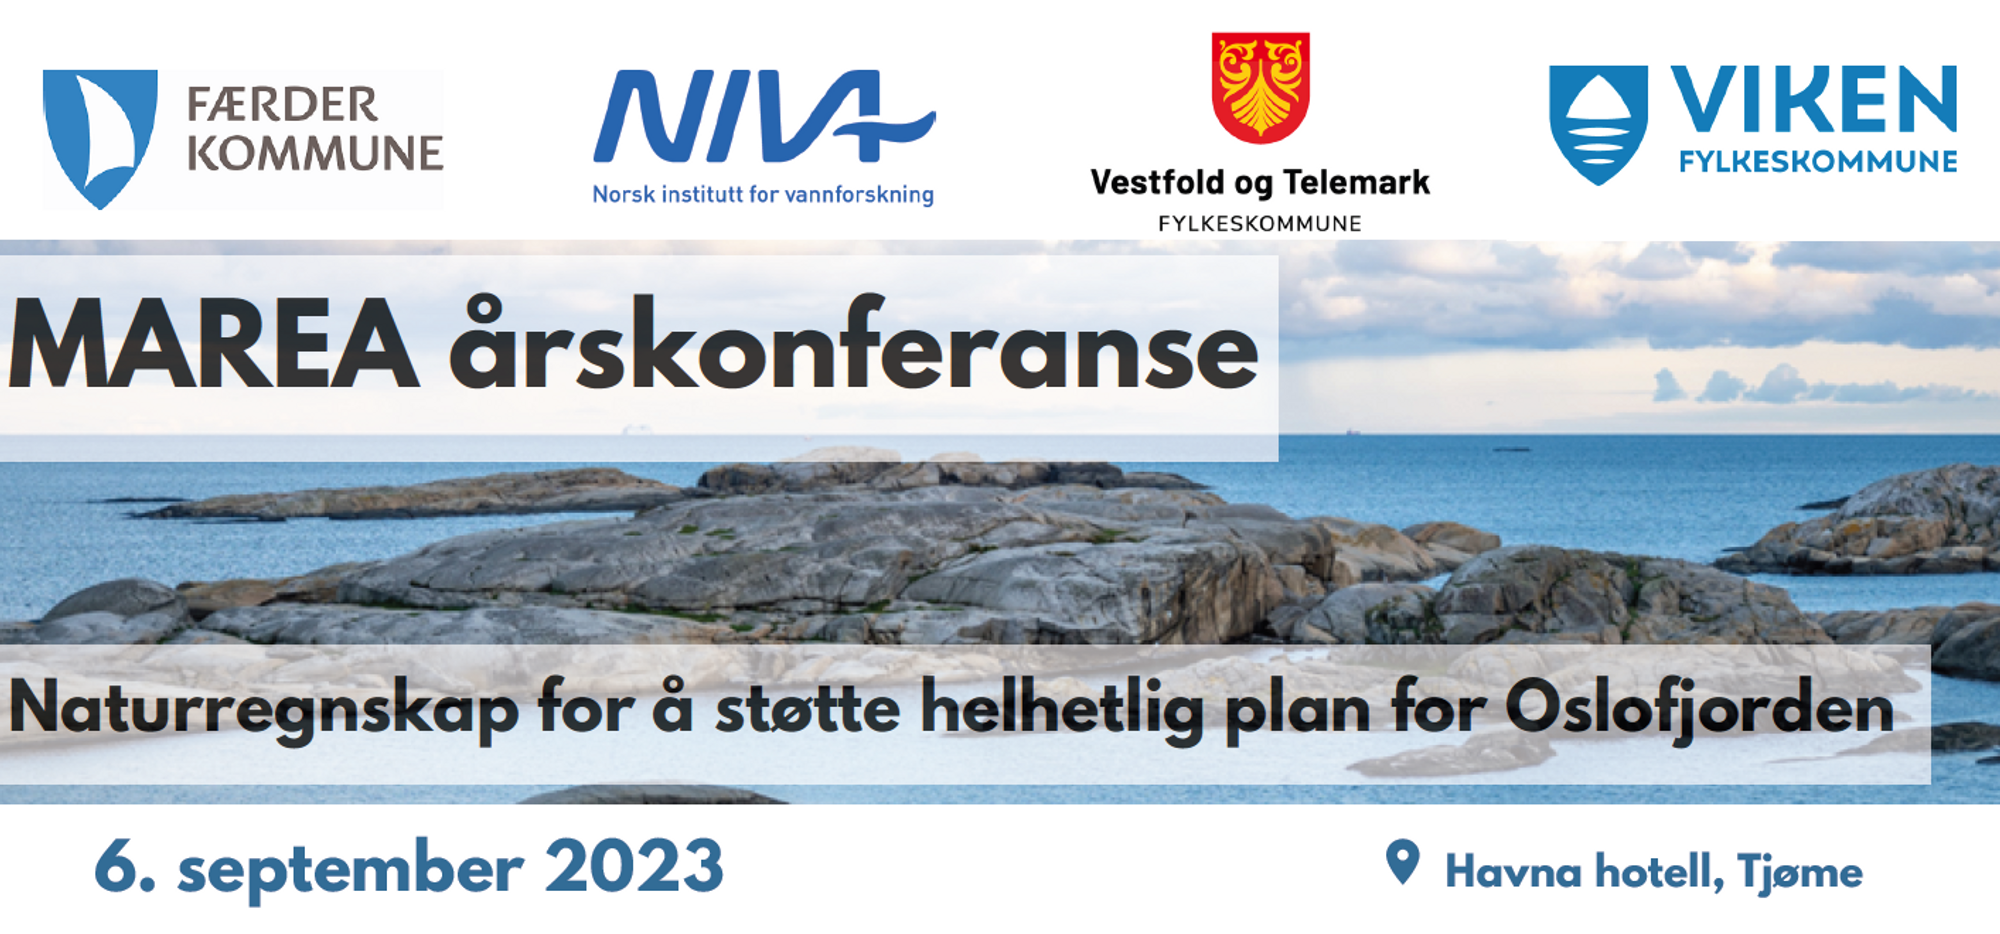 Seminar og konferanse på Oslofjord